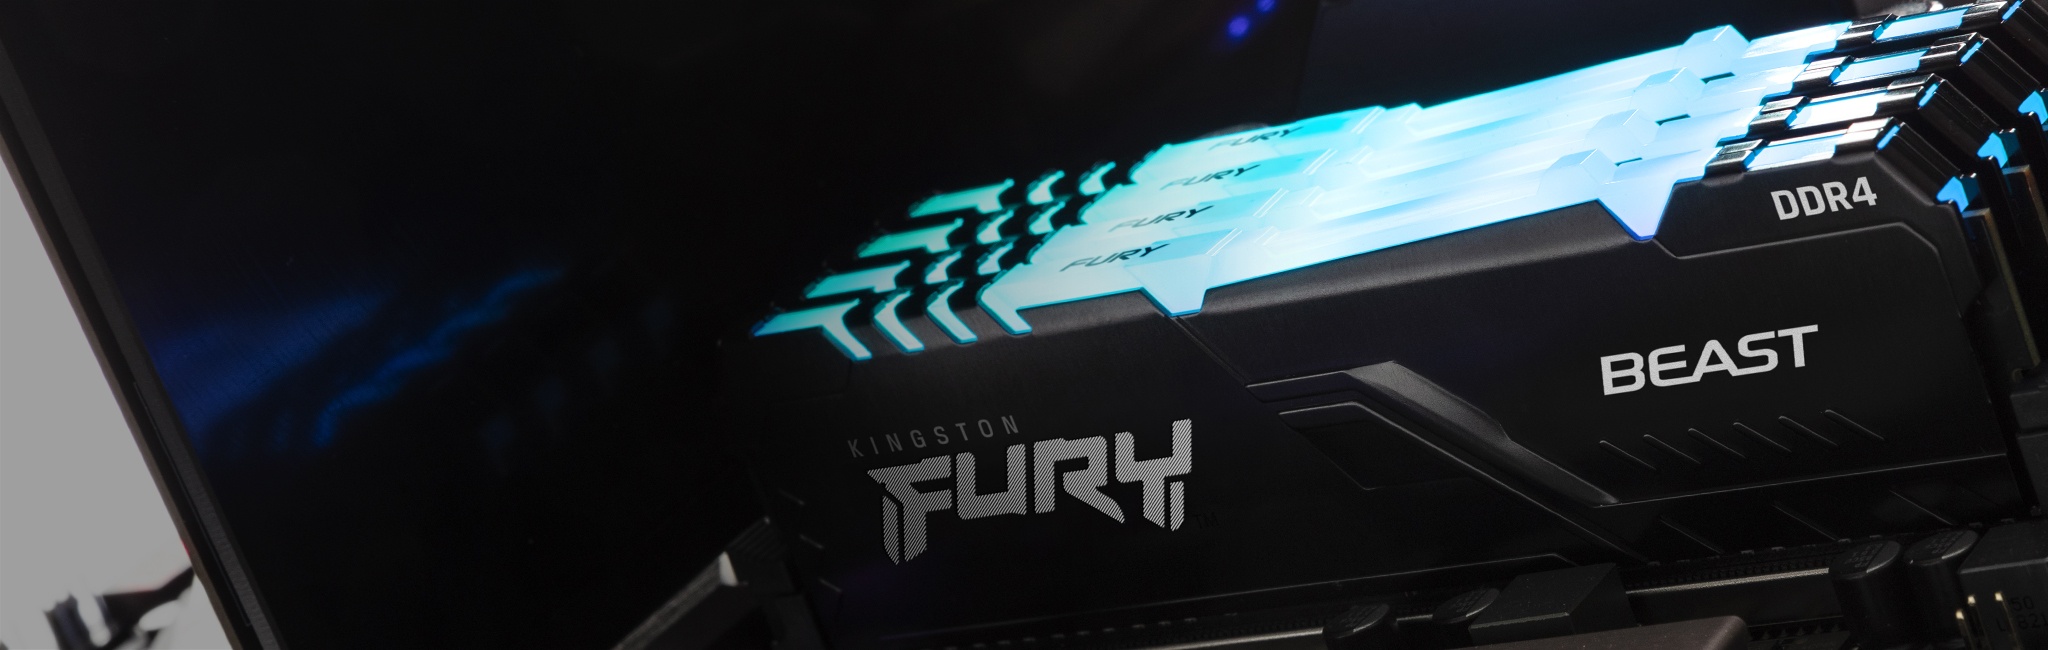 Kingston Fury Beast RGB, установленная на ПК с синим свечением из верхней части модуля